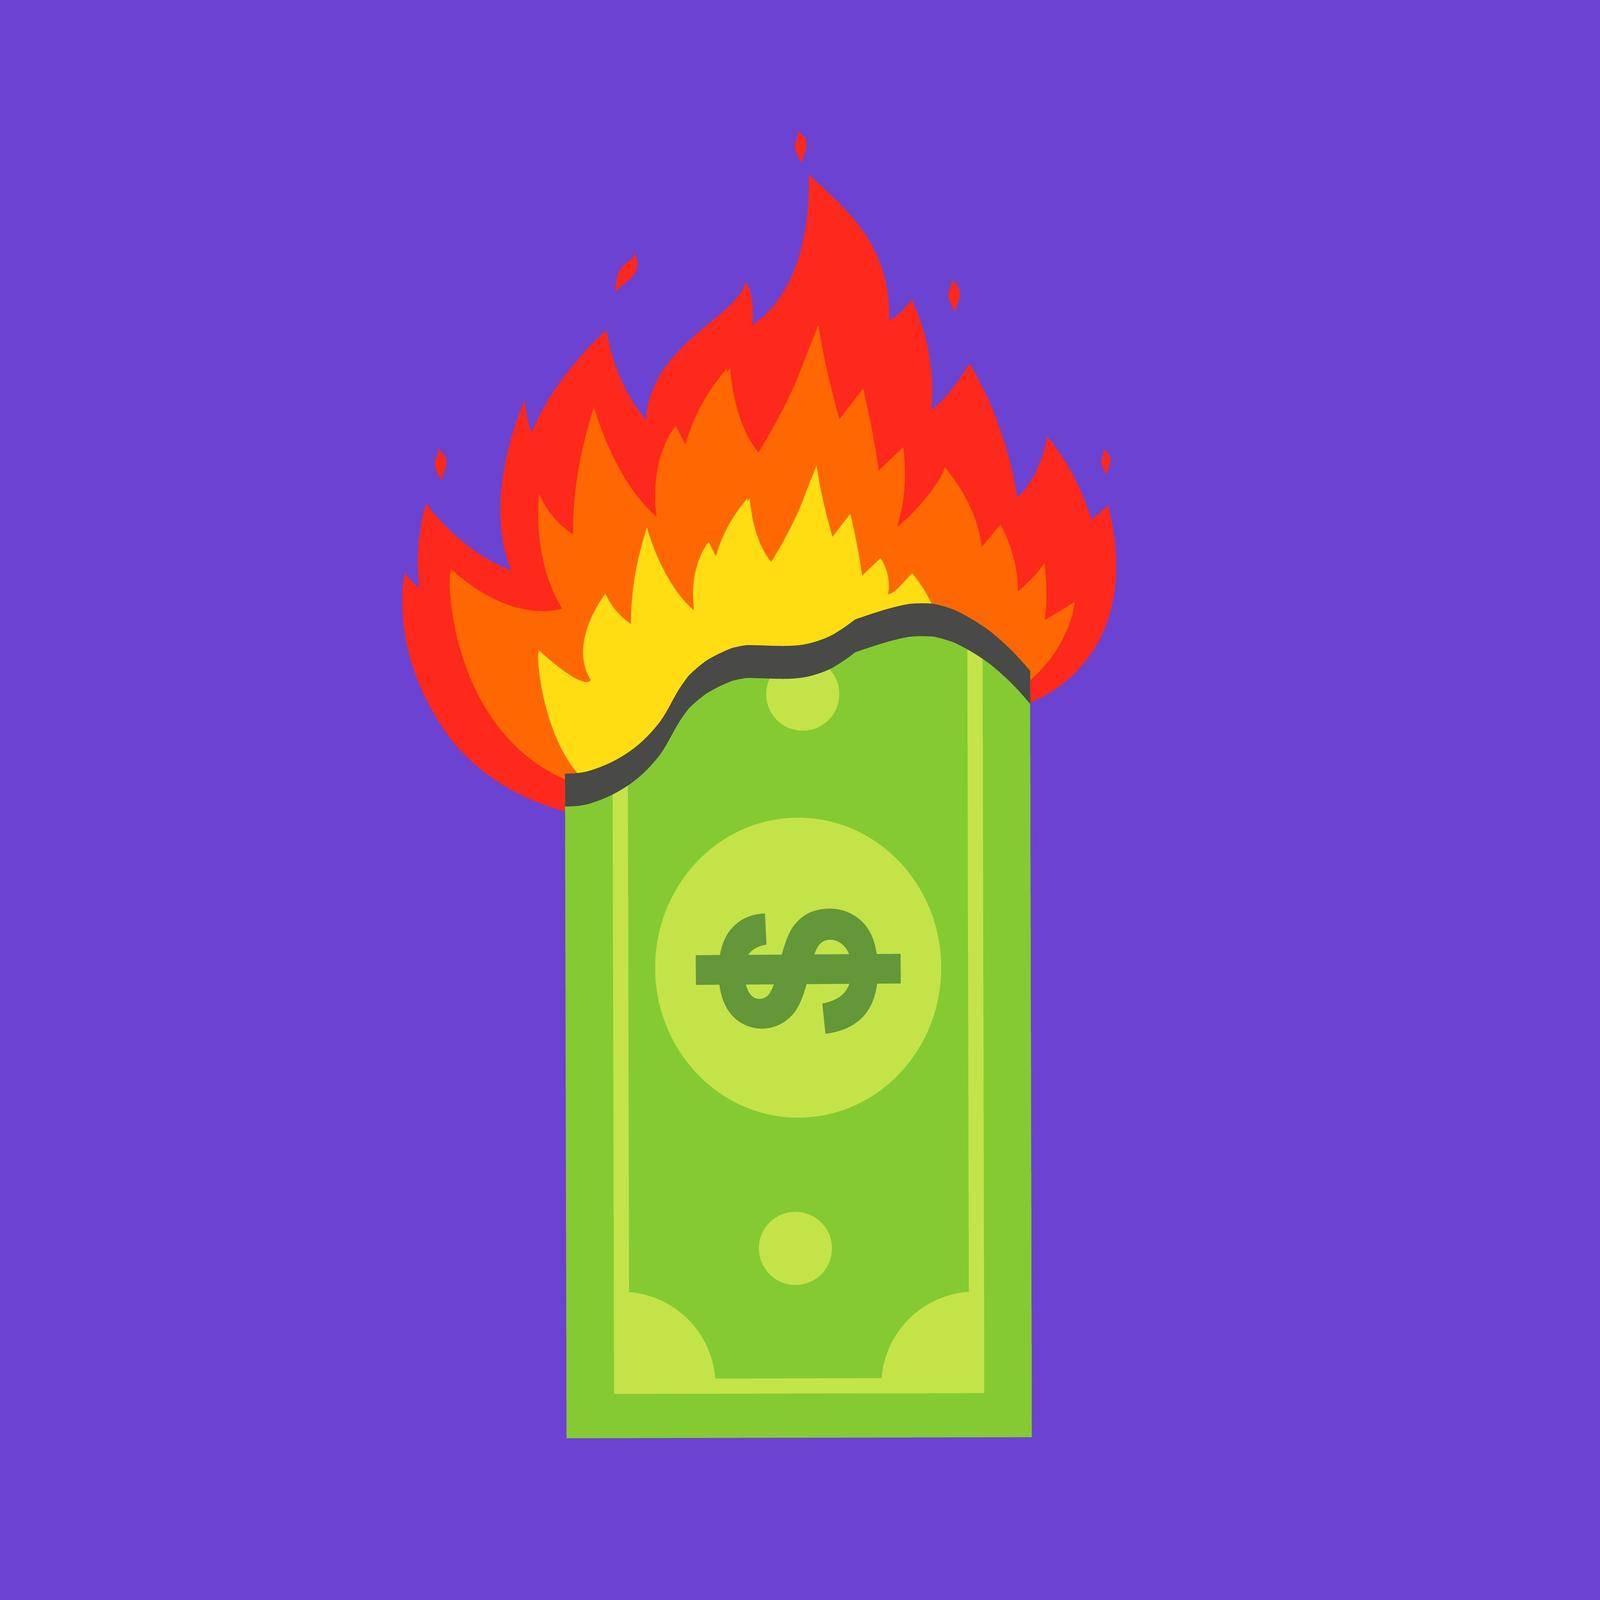 green dollar bill burns. financial crisis. flat vector illustration.